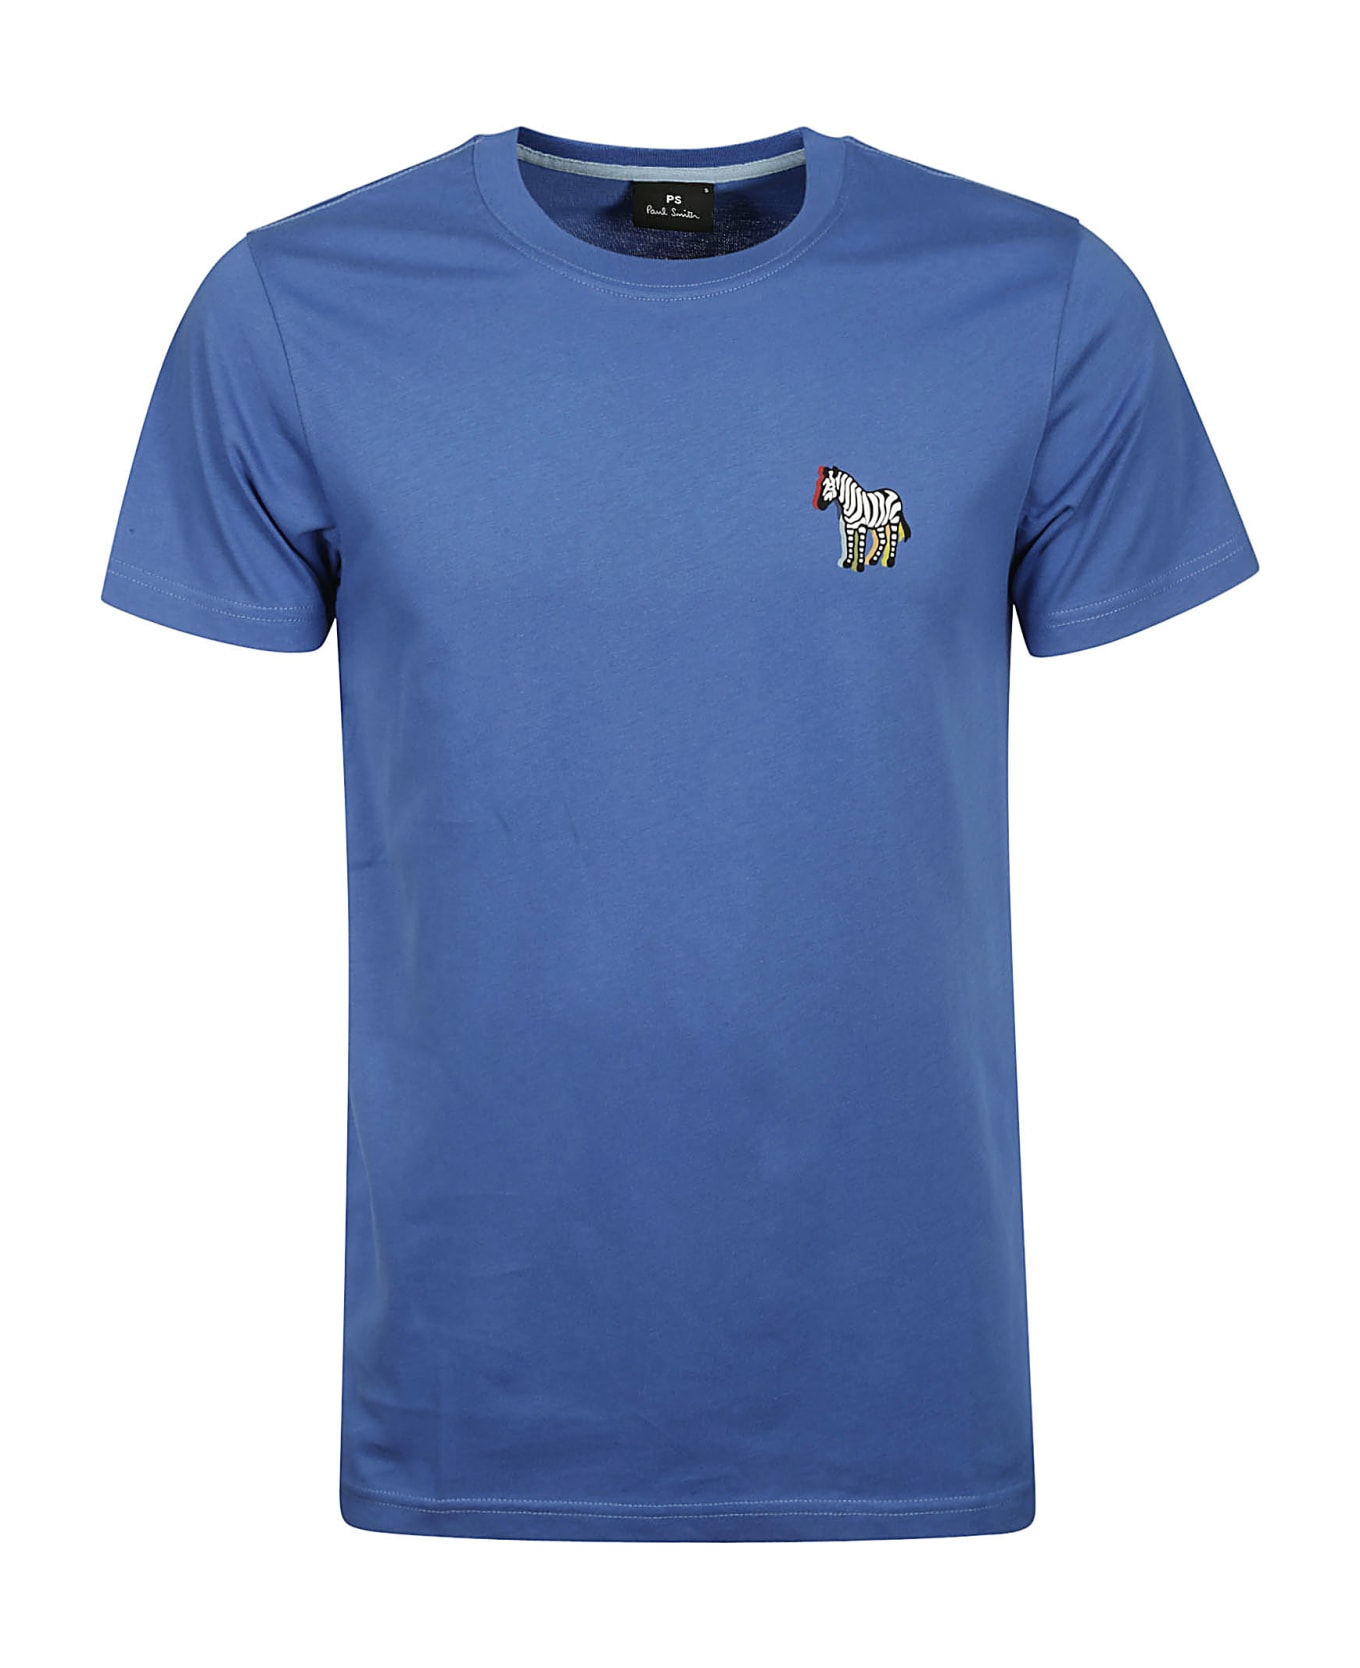 Paul Smith Slim Fit T-shirt B&w Zebra - H Petrol Blue